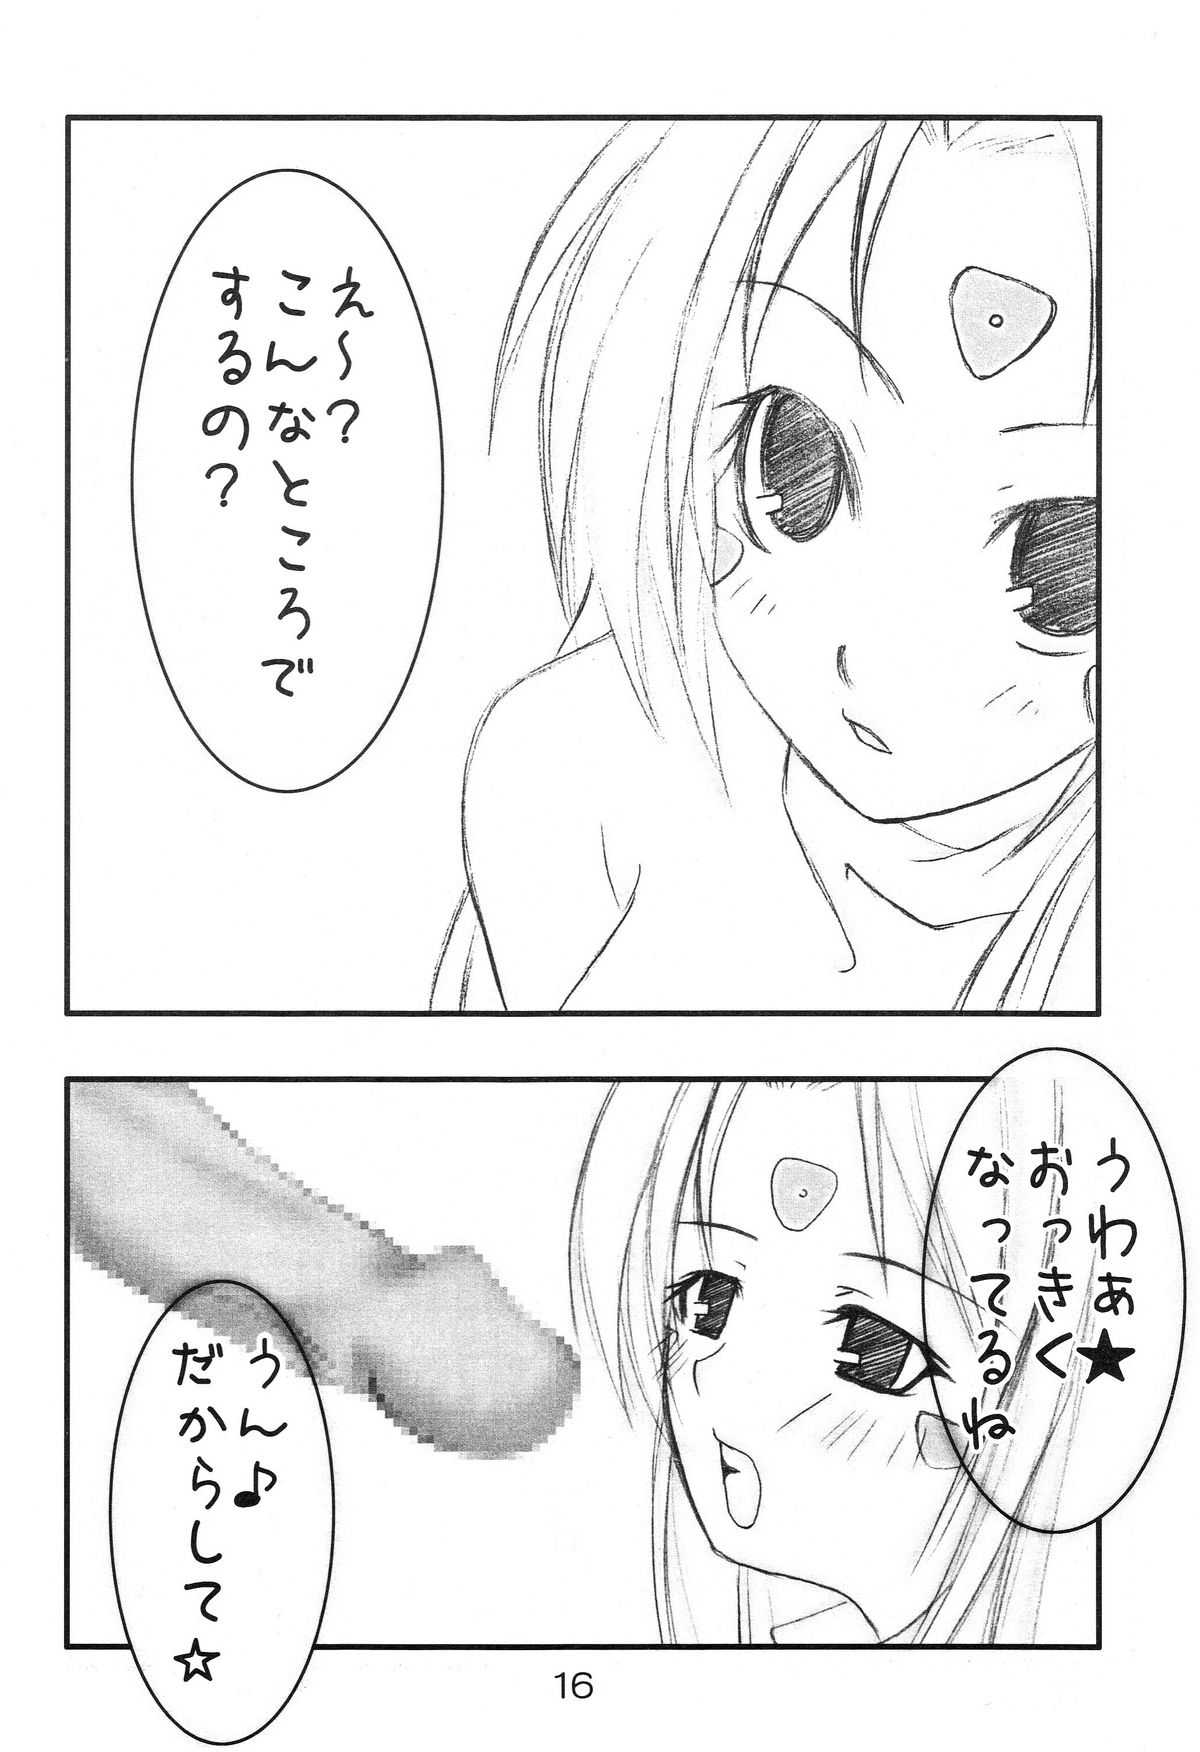 [Studio Boxer] HOHETO 34 (Aa Megami-sama / Oh My Goddess! (Ah! My Goddess!)) [スタジオぼくさぁ] HOHETO 34 (ああっ女神さまっ)